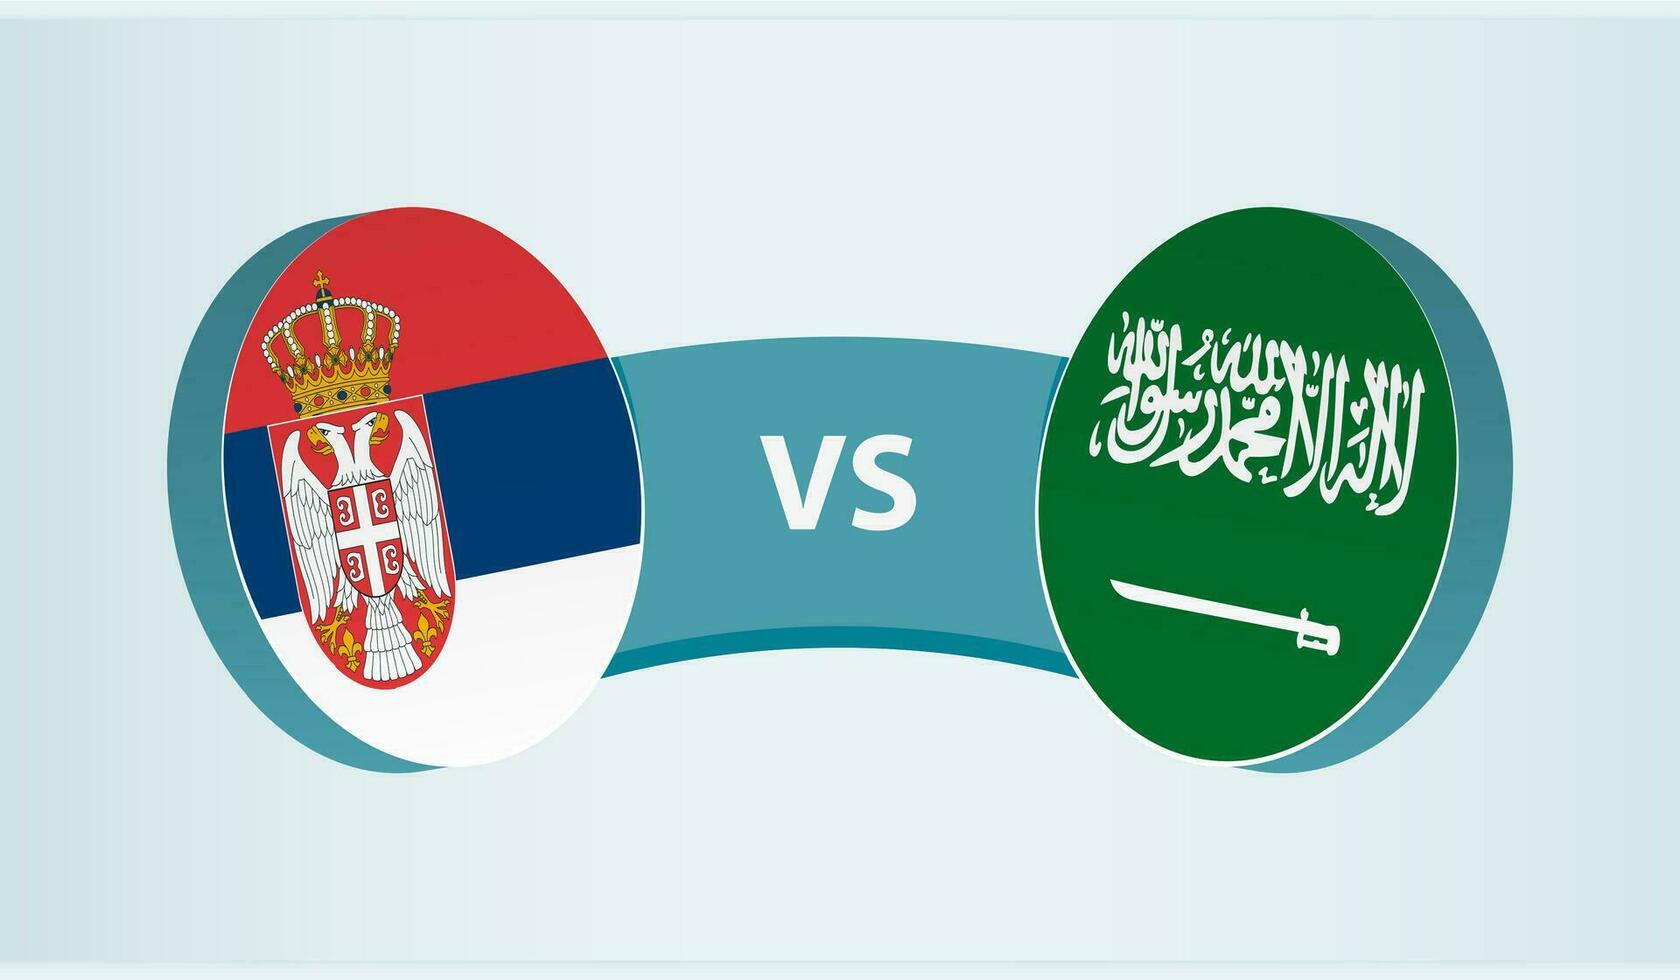 Serbia versus Saudi Arabia, team sports competition concept. vector